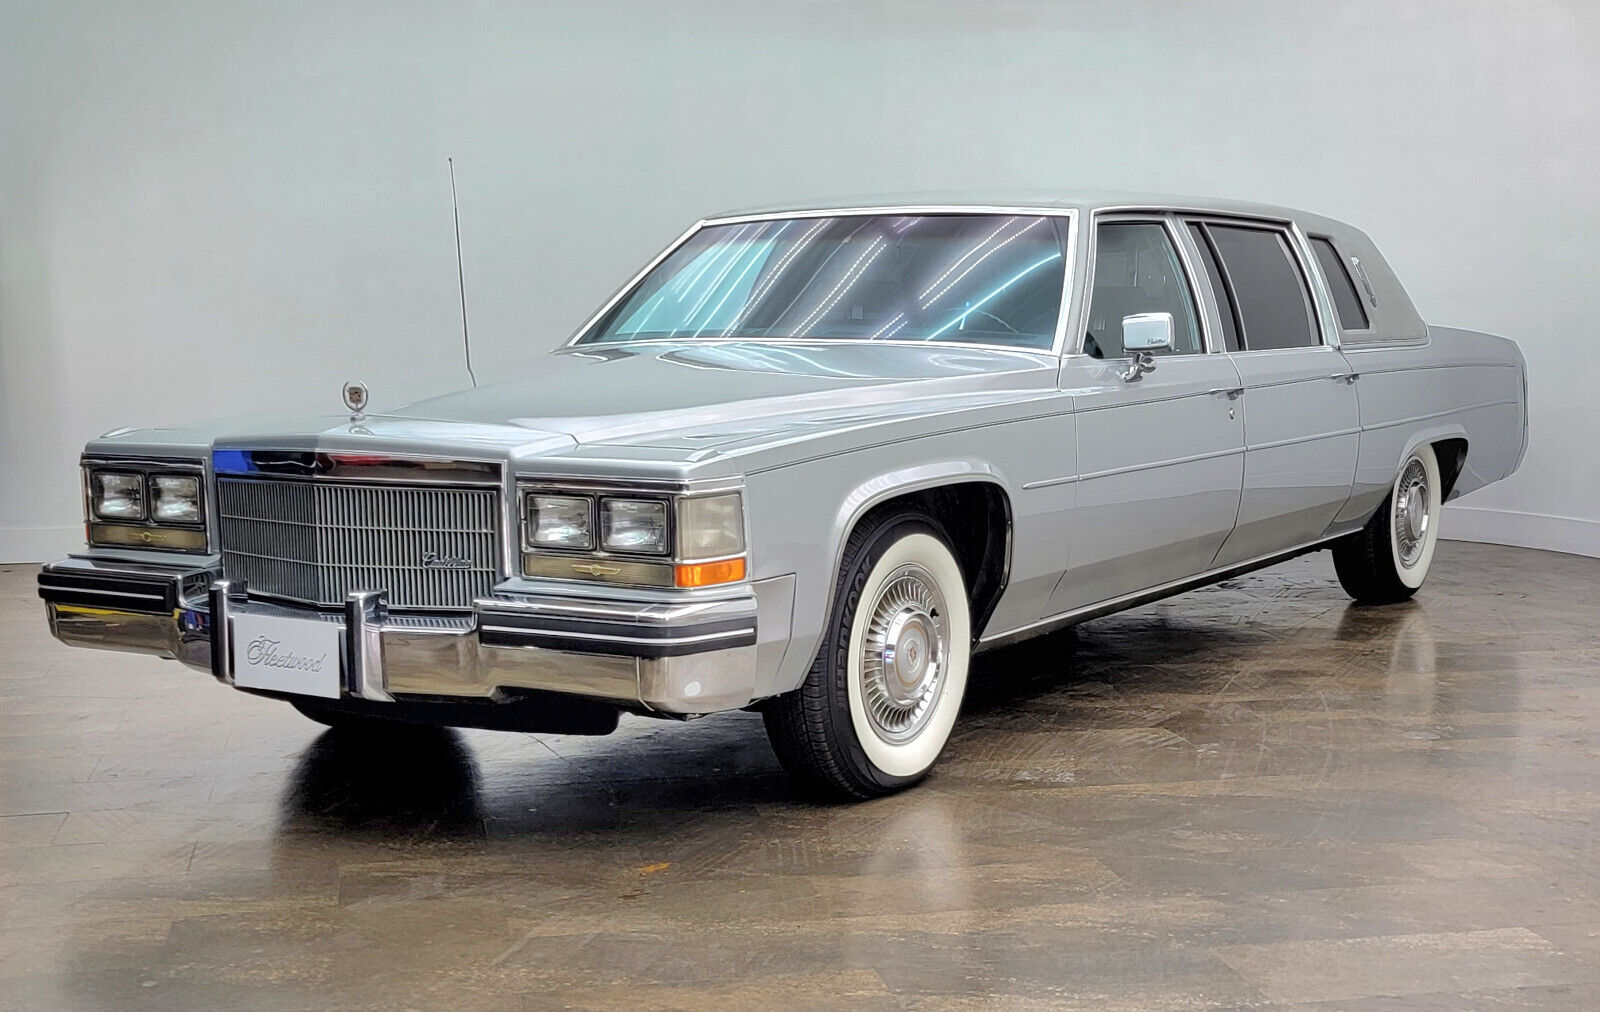 1984 Cadillac Fleetwood Limousine - 41,797 Original Miles